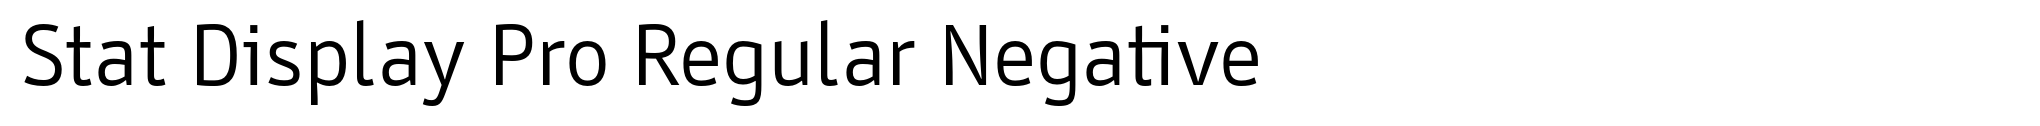 Stat Display Pro Regular Negative image